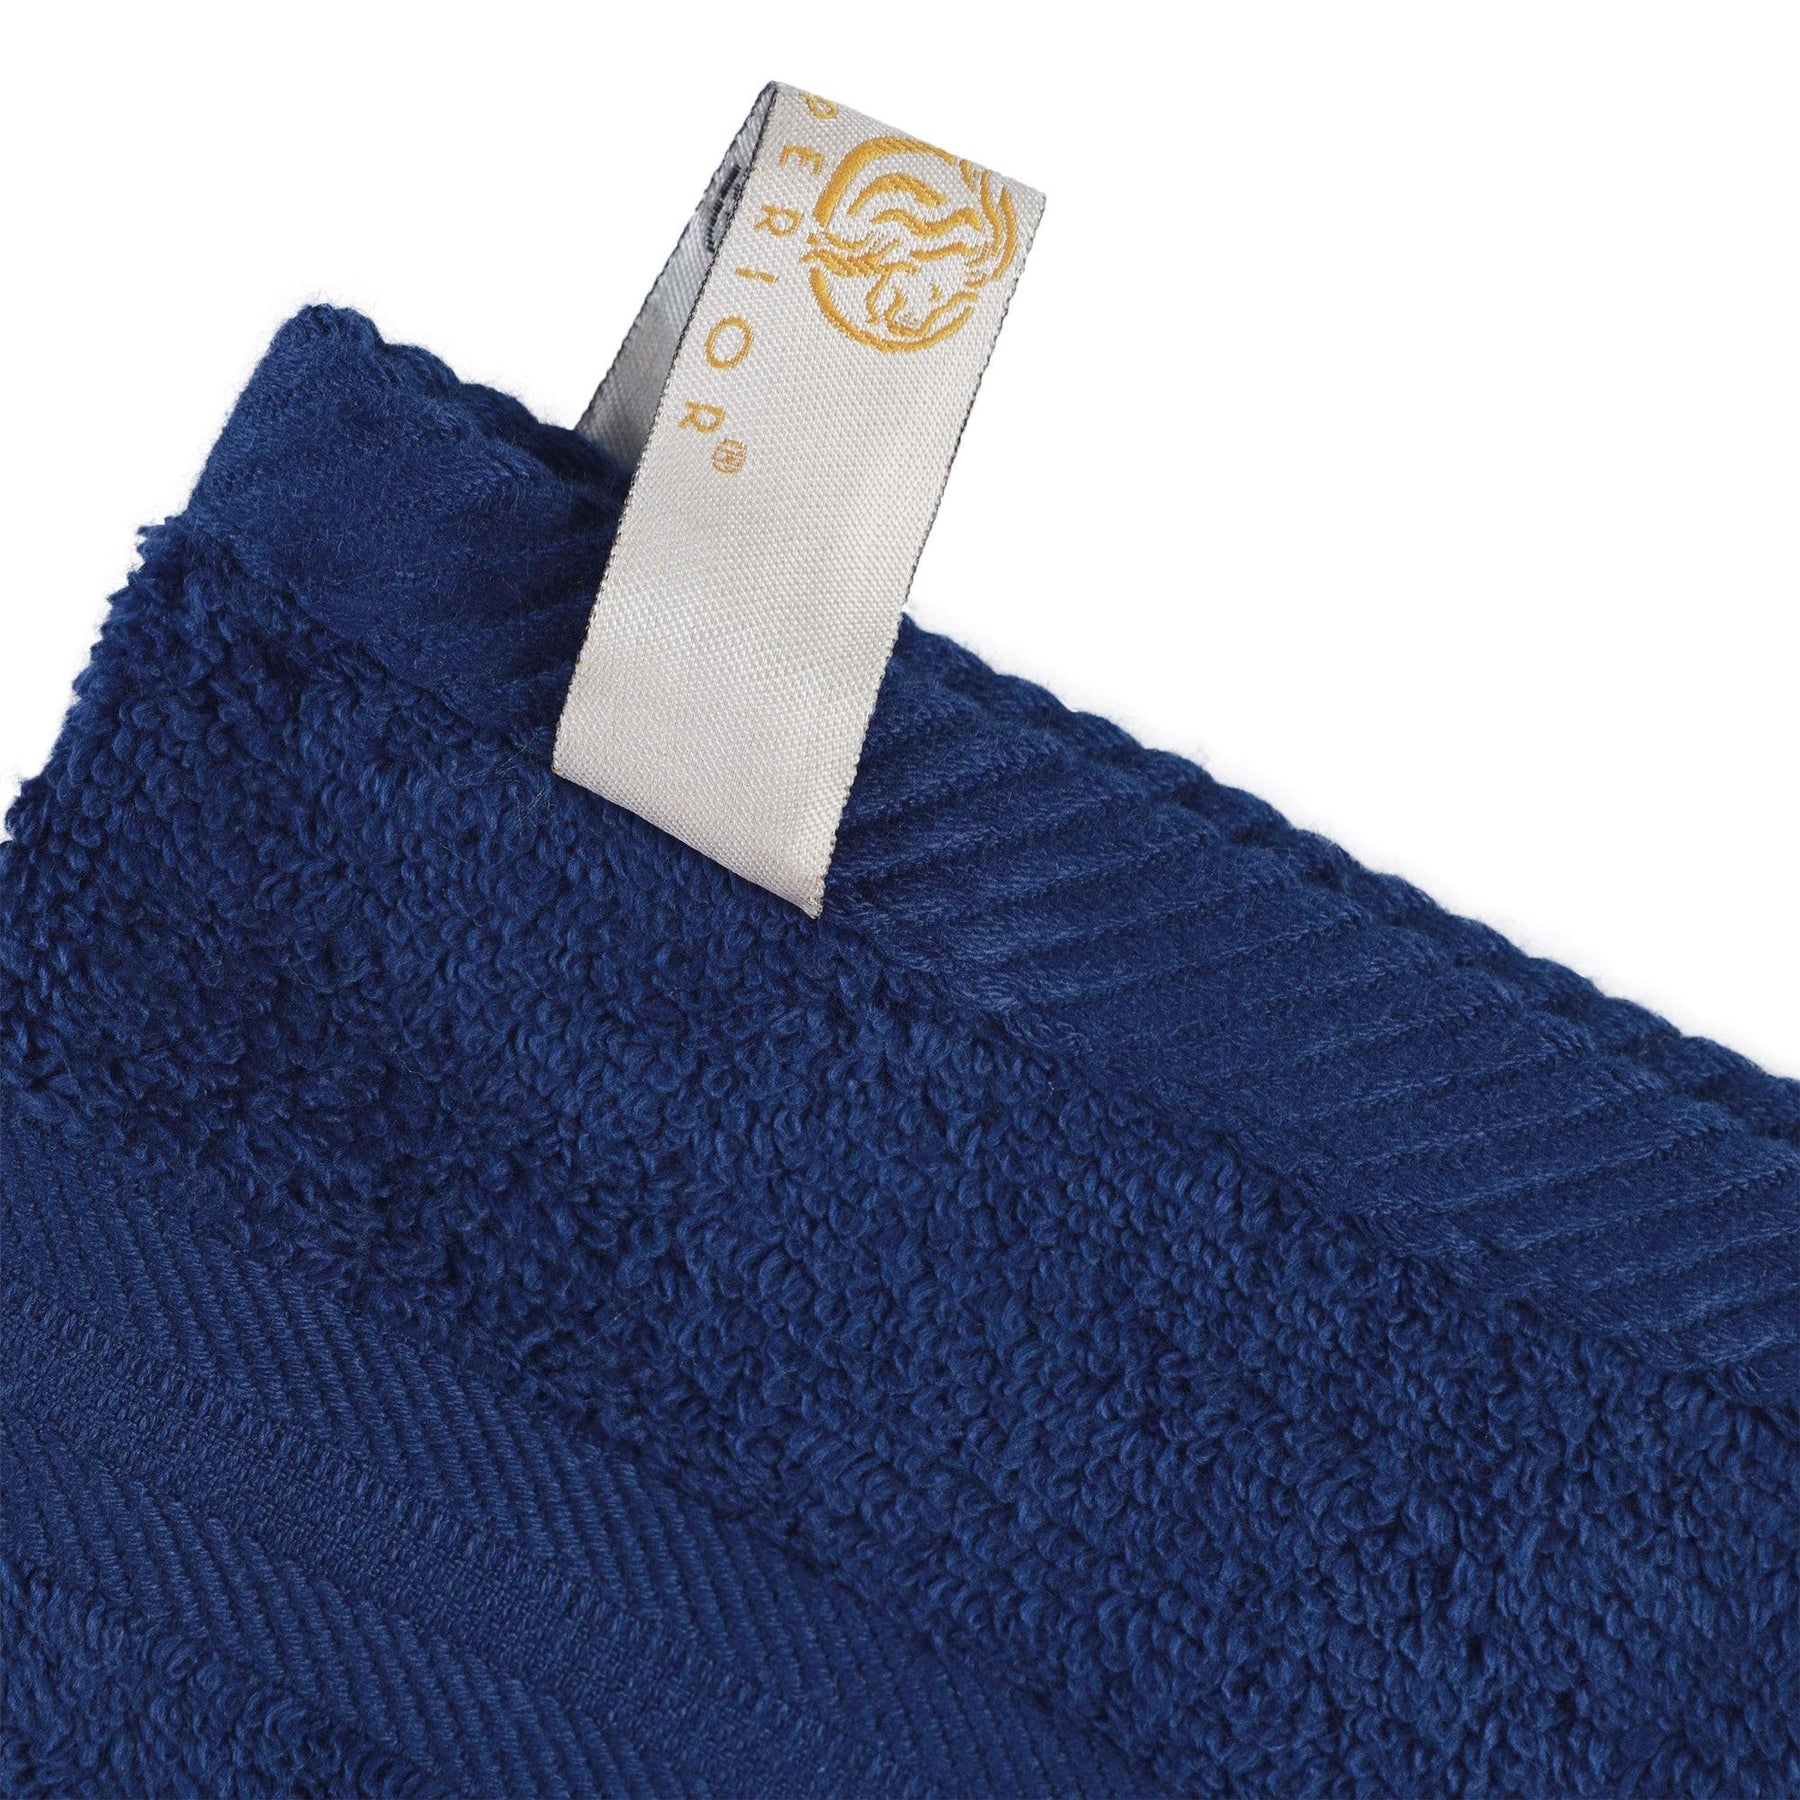  Superior Smart Dry Zero Twist Cotton 8-Piece Assorted Towel Set - Navy Blue